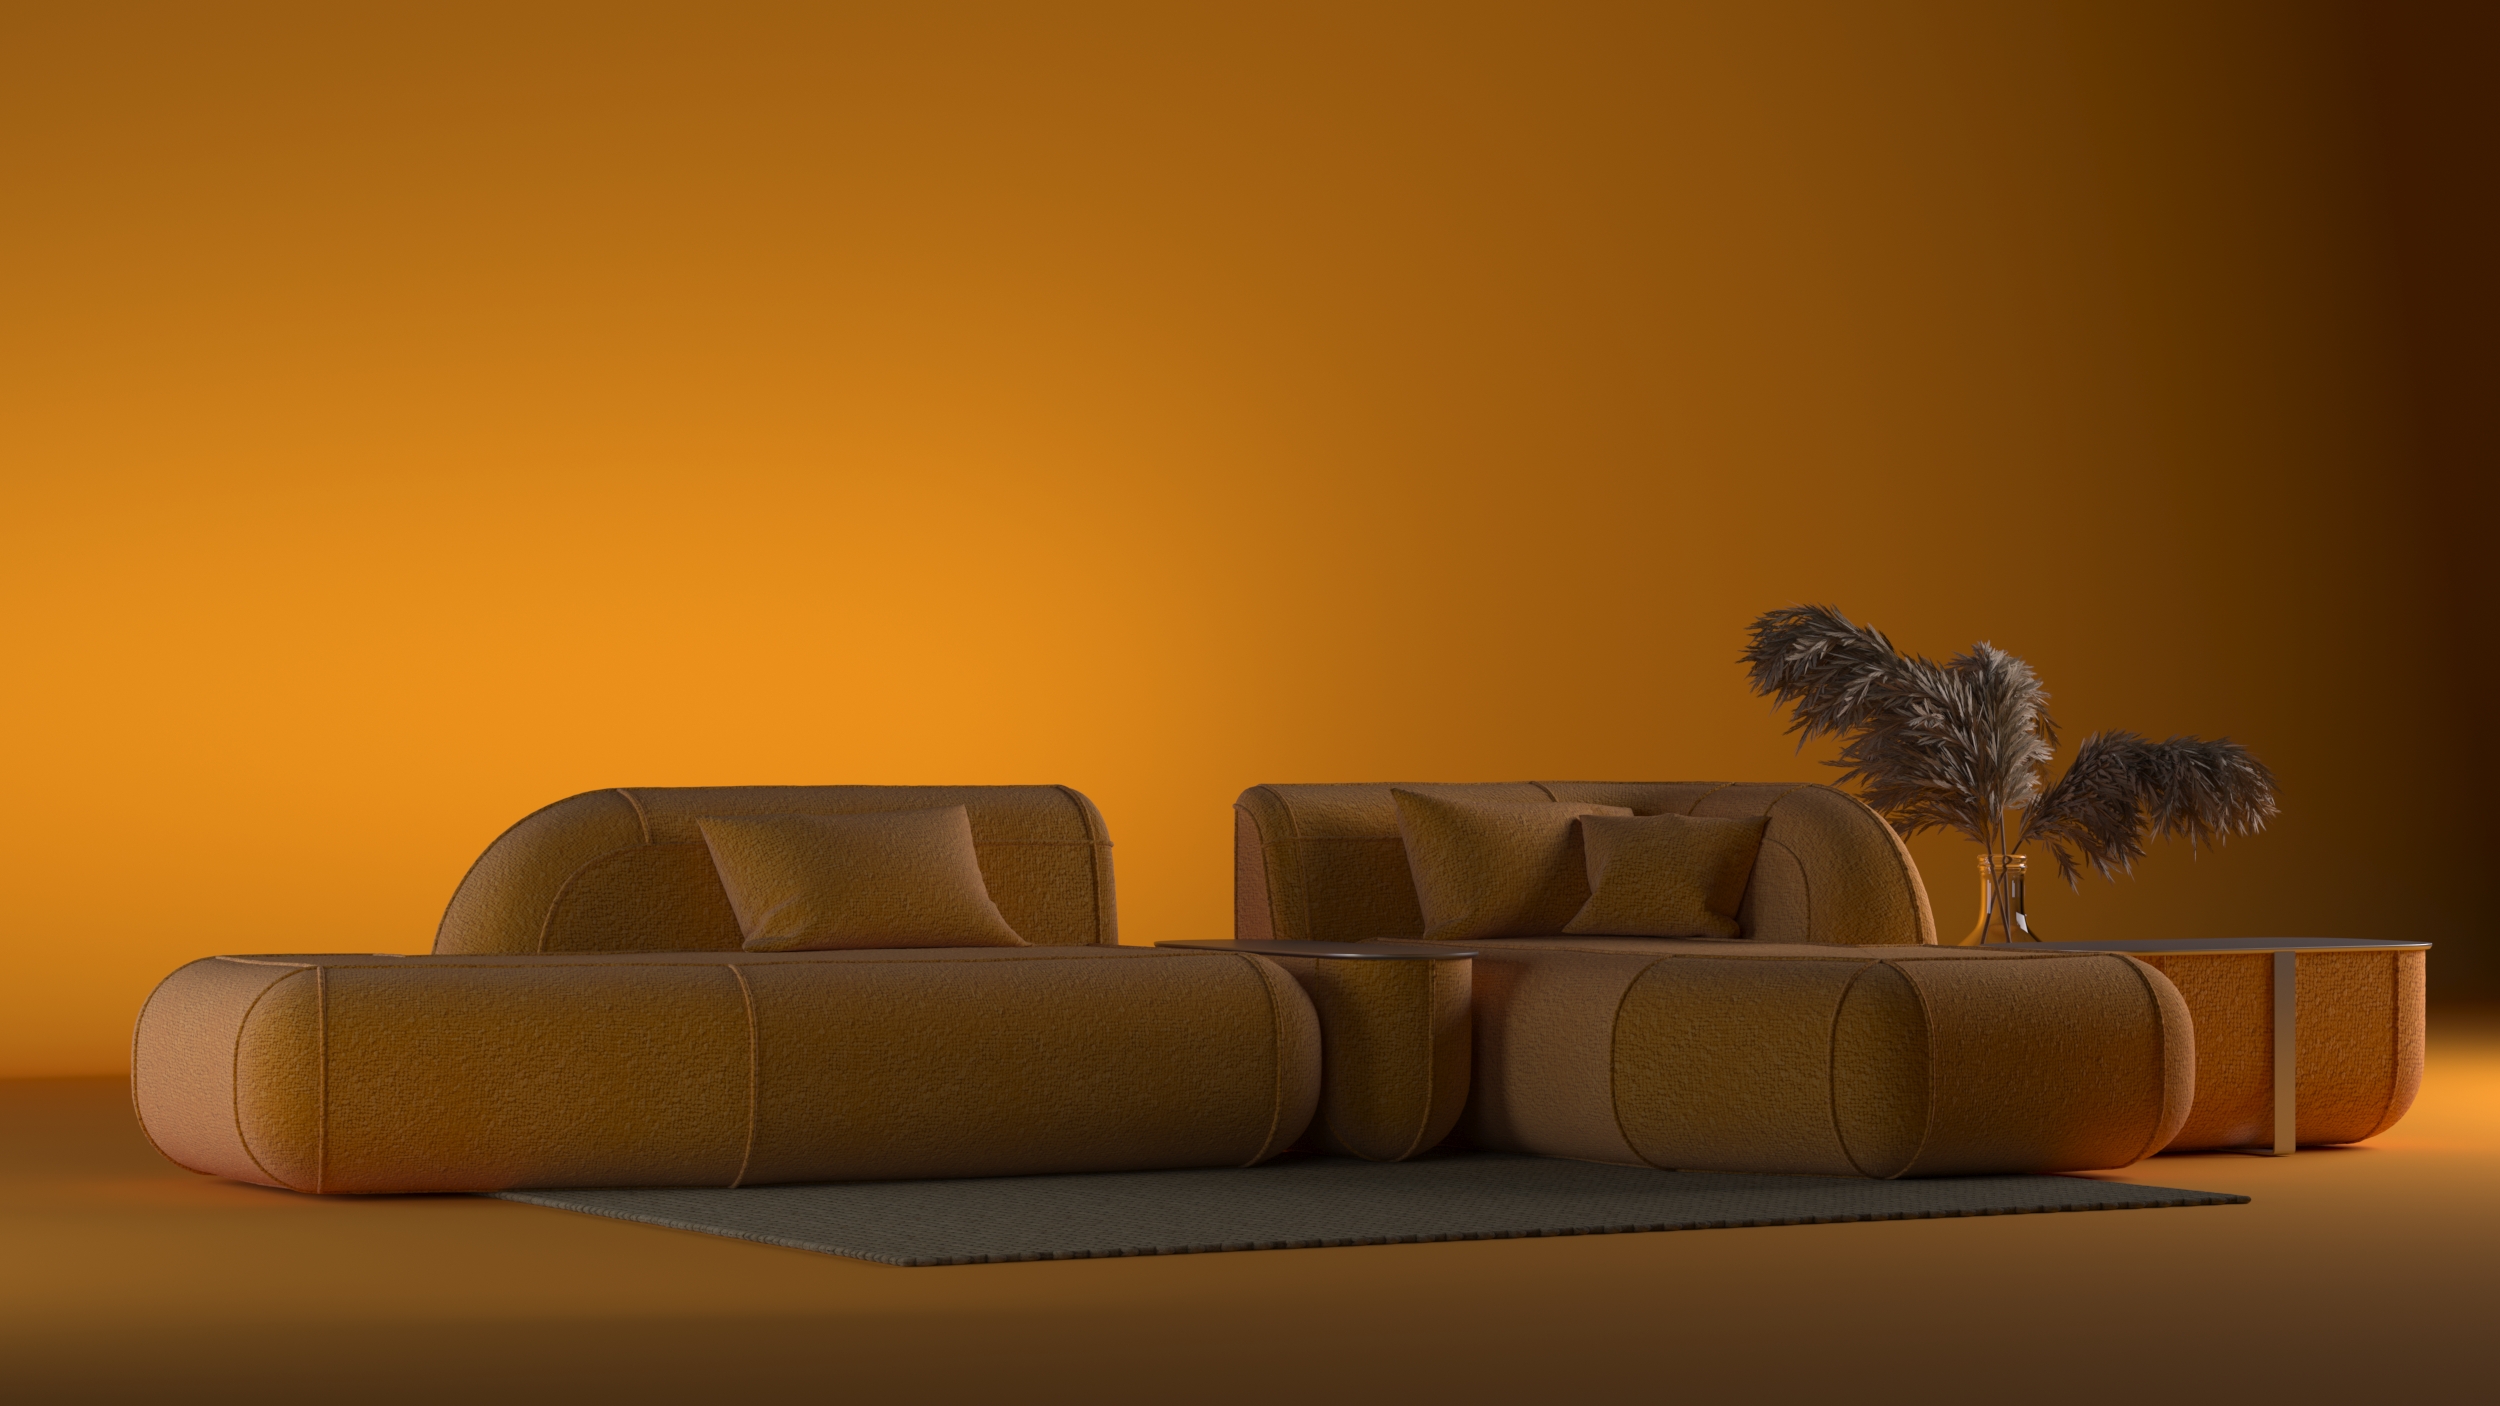 Orgullo me quejo Consejo Raft sofa / Product design / Portfolio